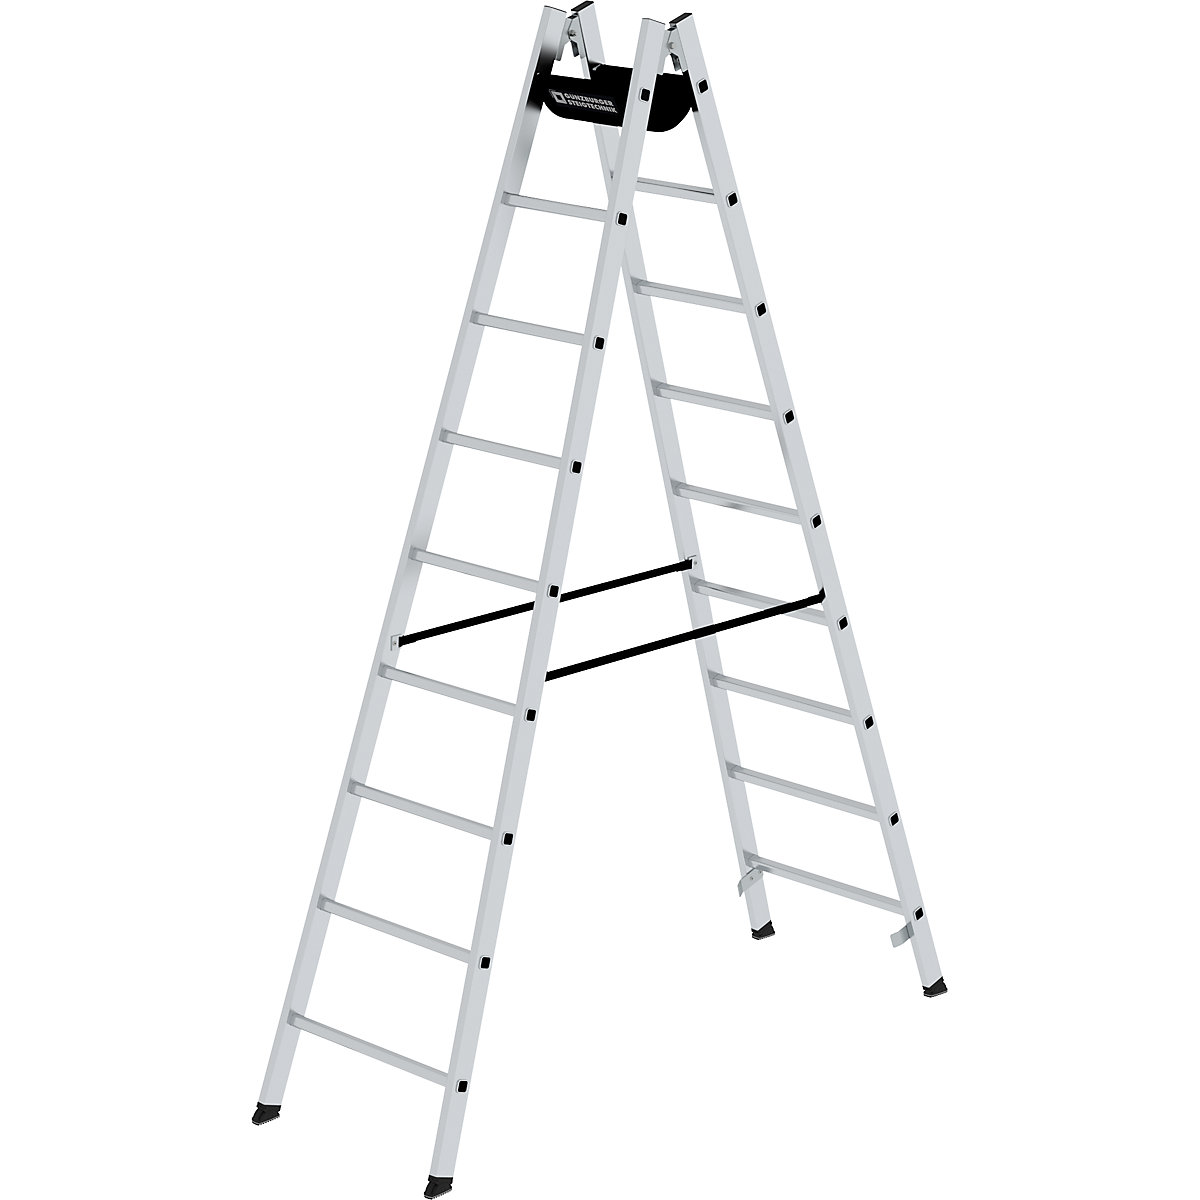 Safety rung ladder, double sided access – MUNK, rungs 30 x 30 mm, non-slip, 2x9 rungs-6